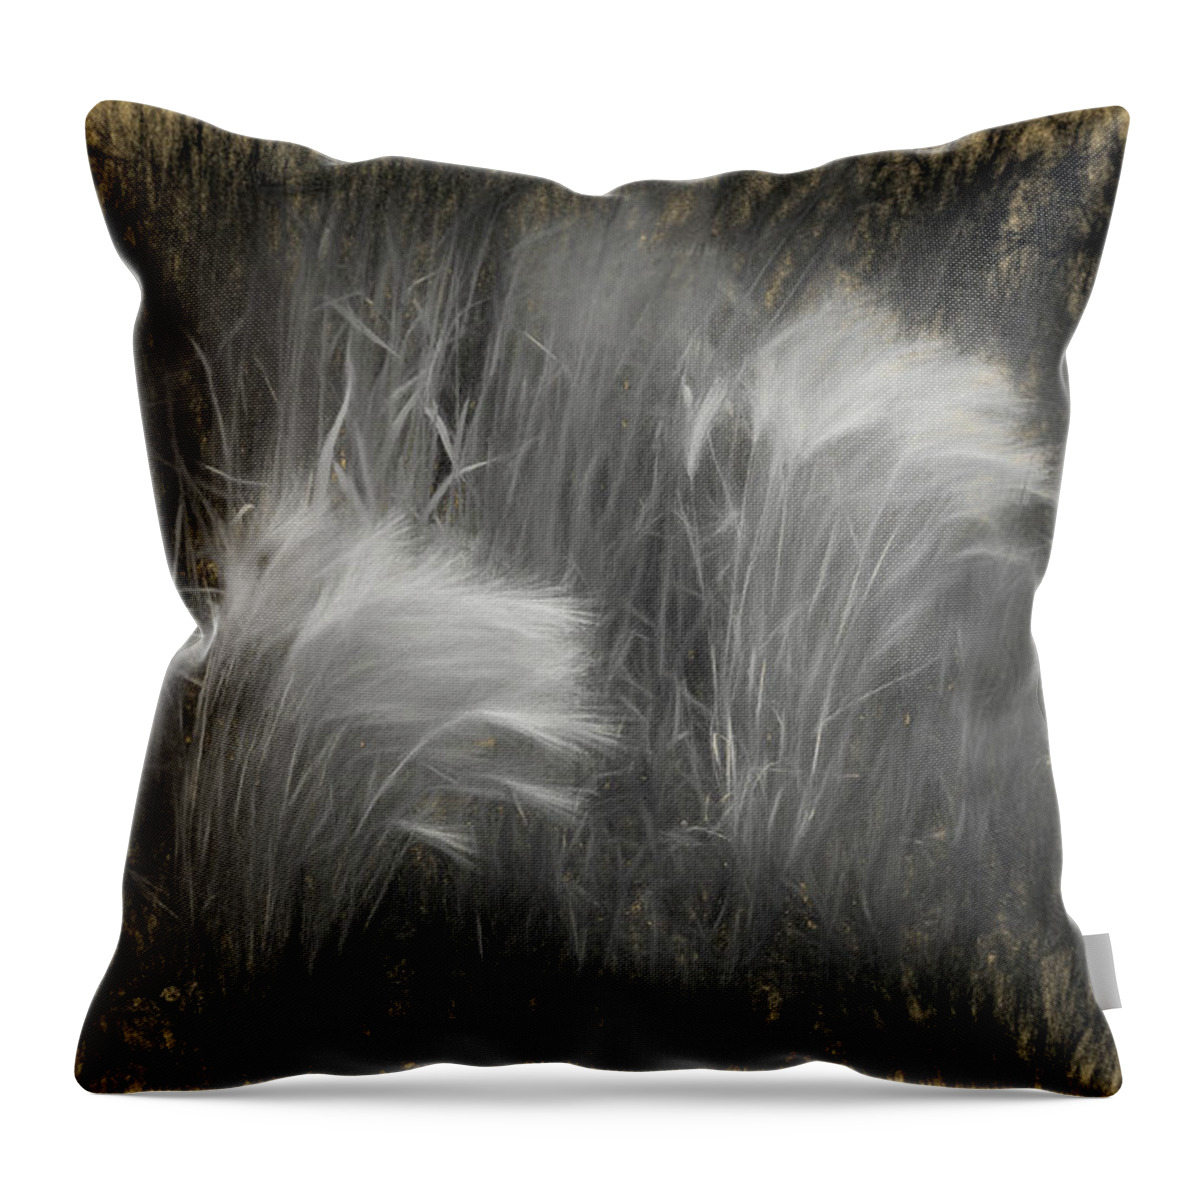 Wildflower Throw Pillow featuring the digital art Foxtail Barley by Scott Carlton